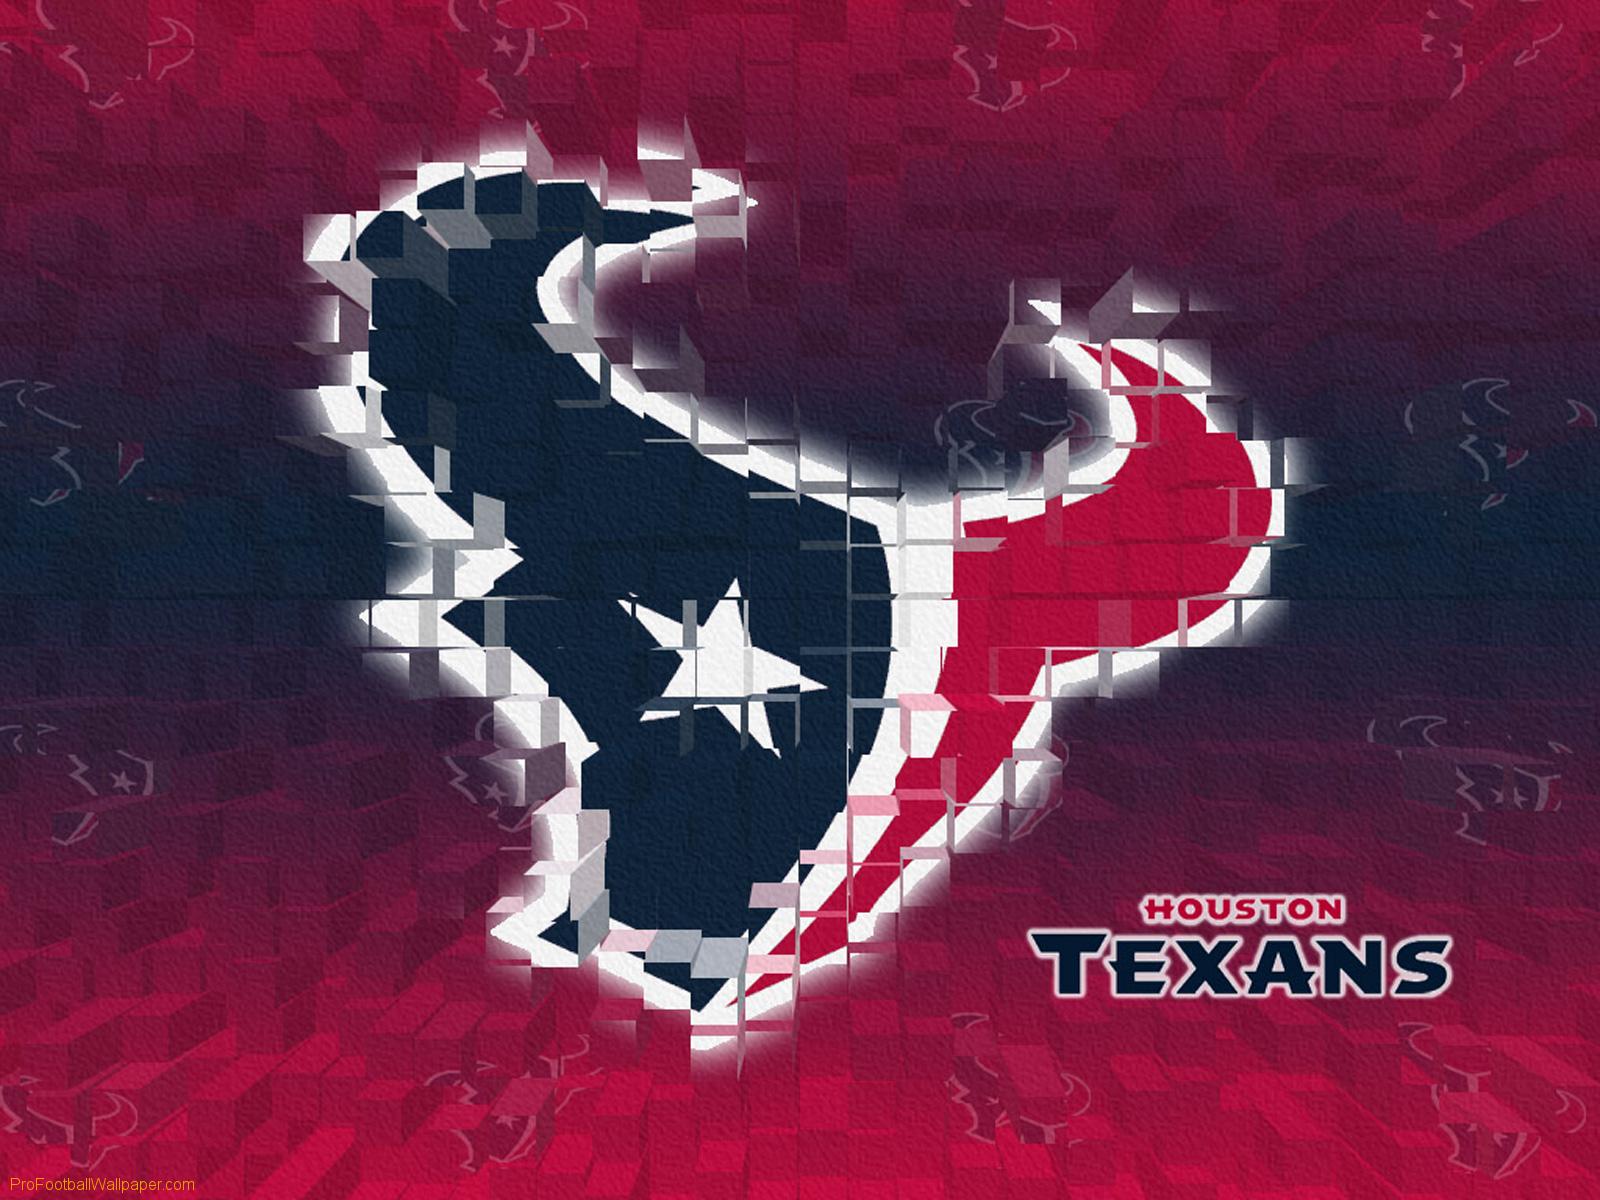 Houston Texans Wallpaper 3d